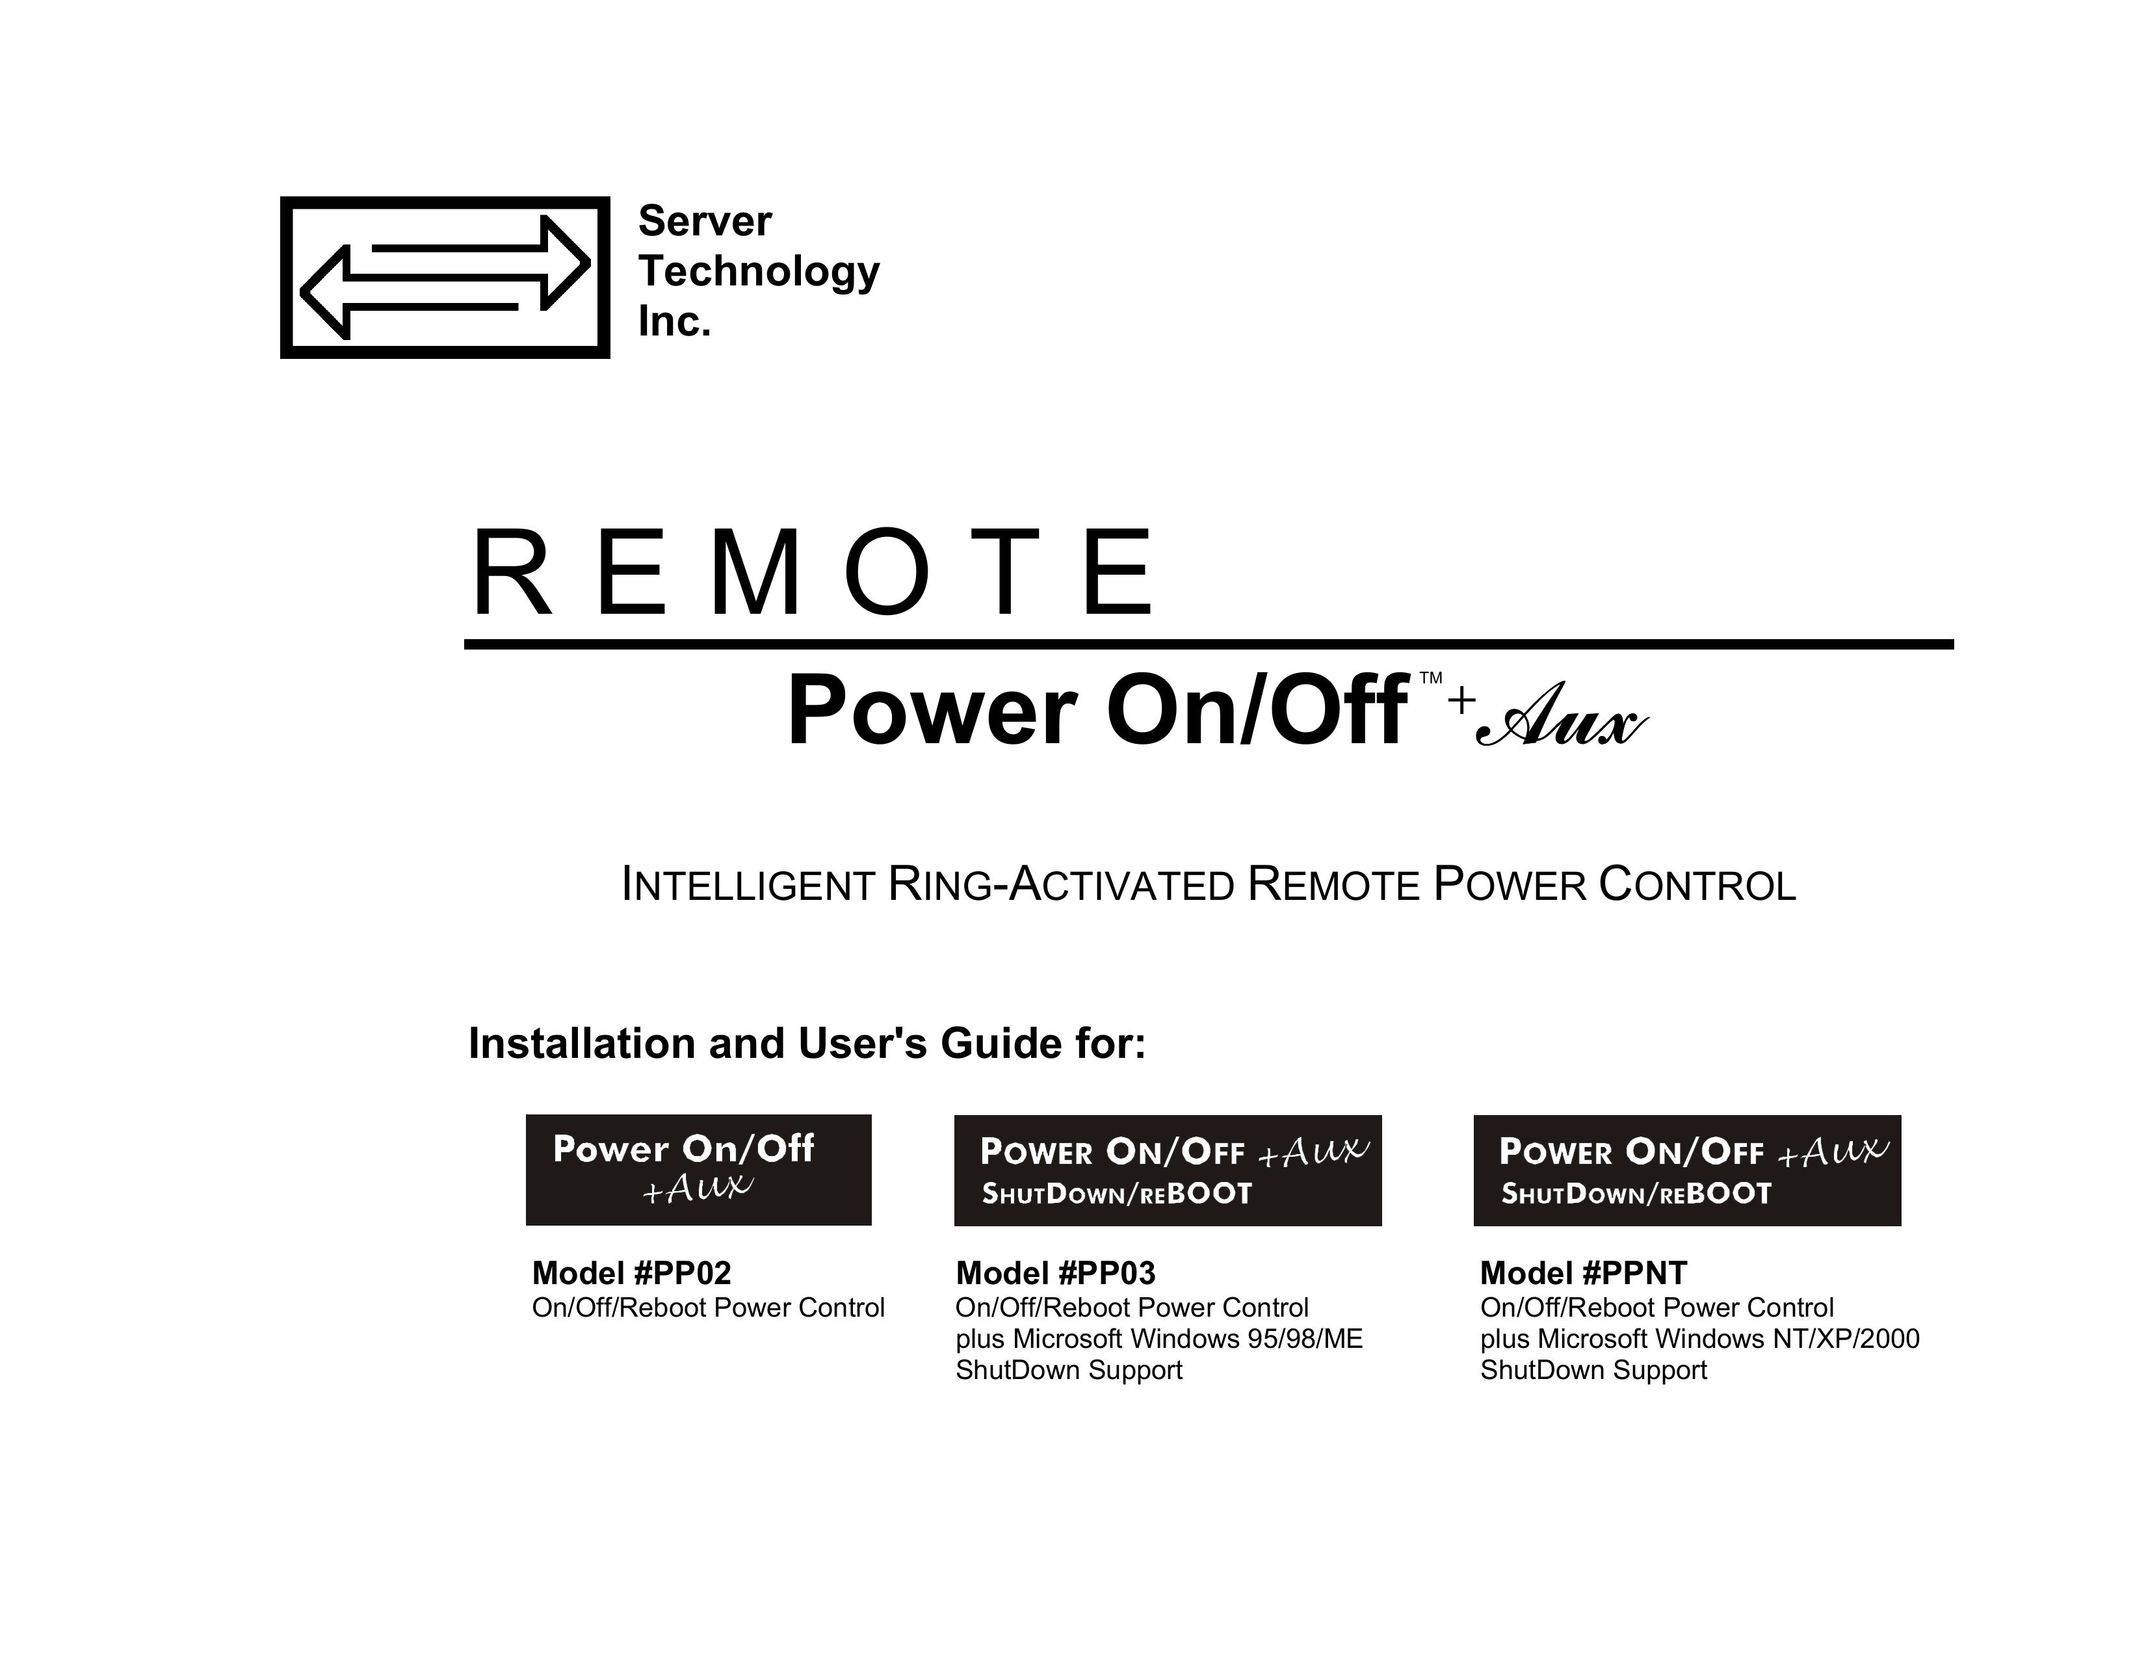 Server Technology PPNT Universal Remote User Manual